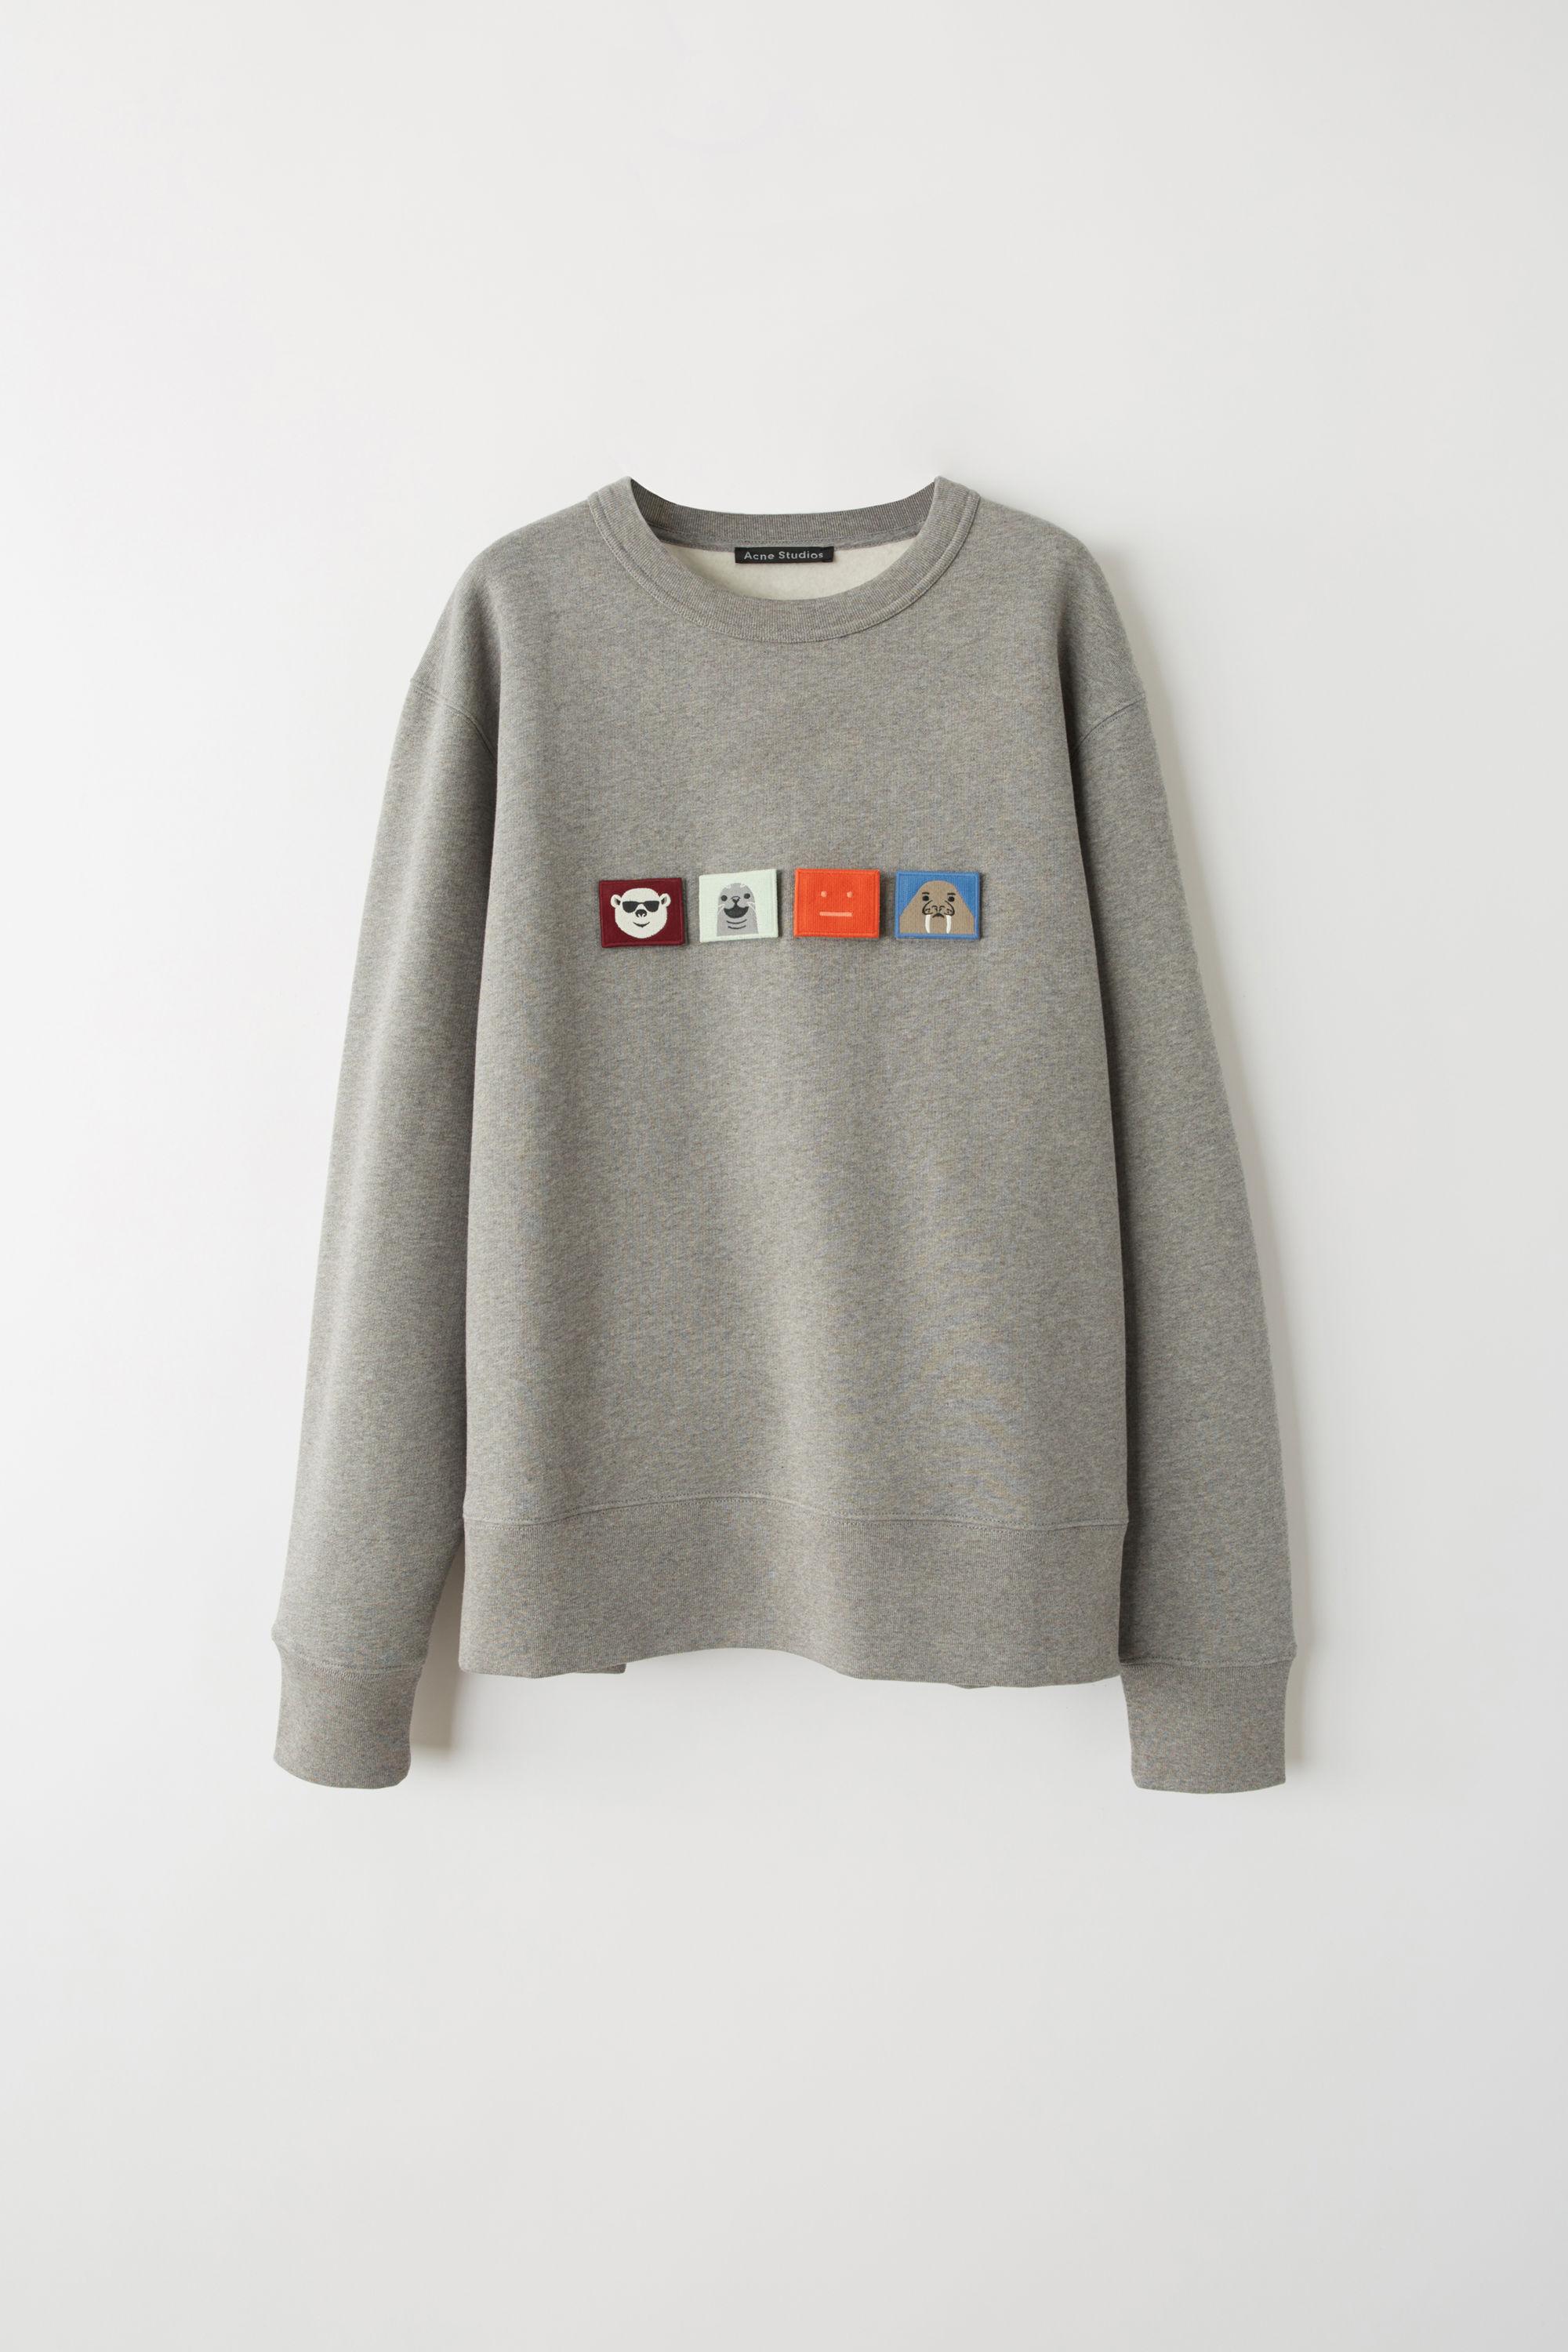 Acne Studios Fleece Fa-ux-swea000018 Light Grey Melange Regular Fit  Sweatshirt in Gray for Men - Lyst